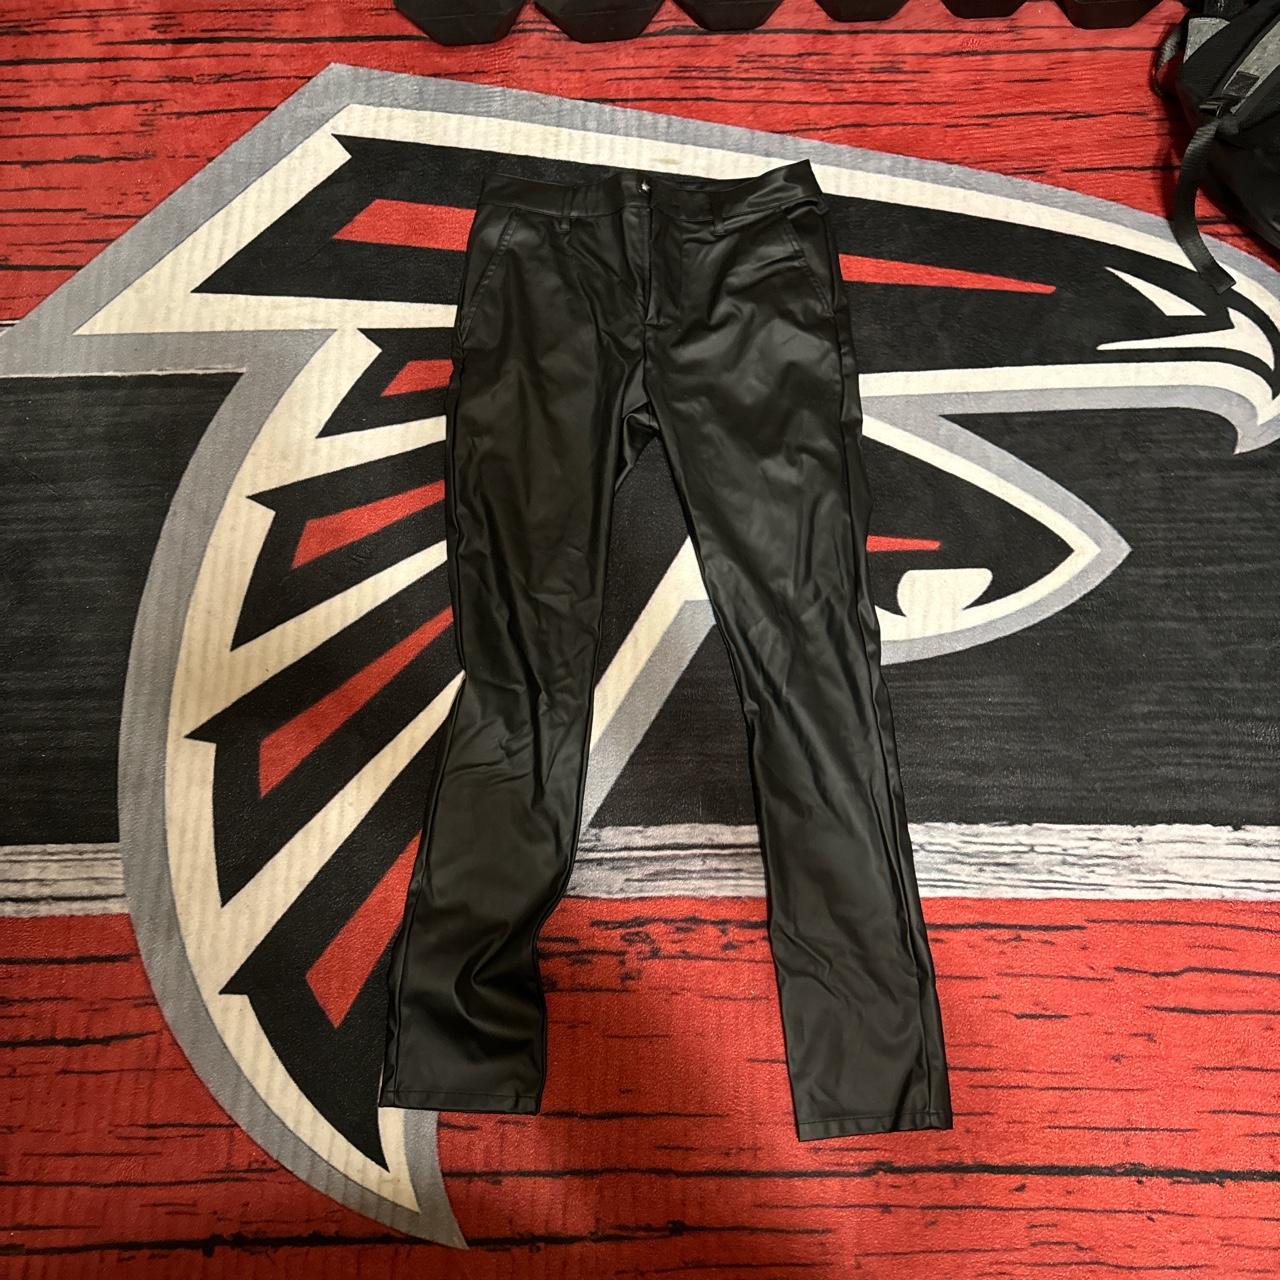 Size: 30 HarleyDavidson Harley Davidson Leather Pants